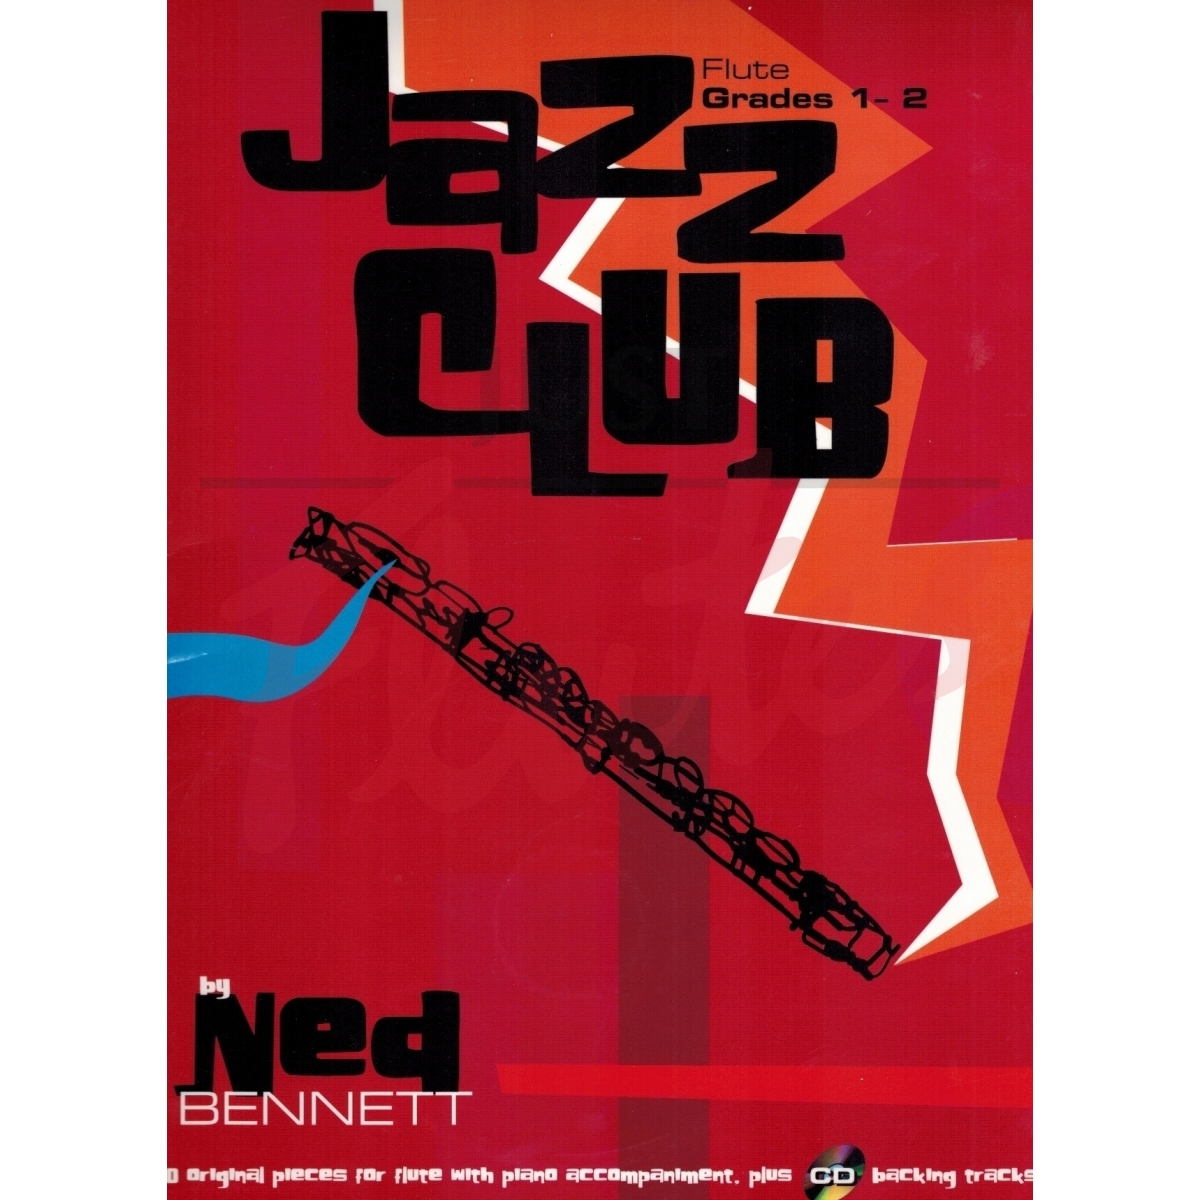 Jazz Club. Grades 1-2 - Book (BENNETT NED)